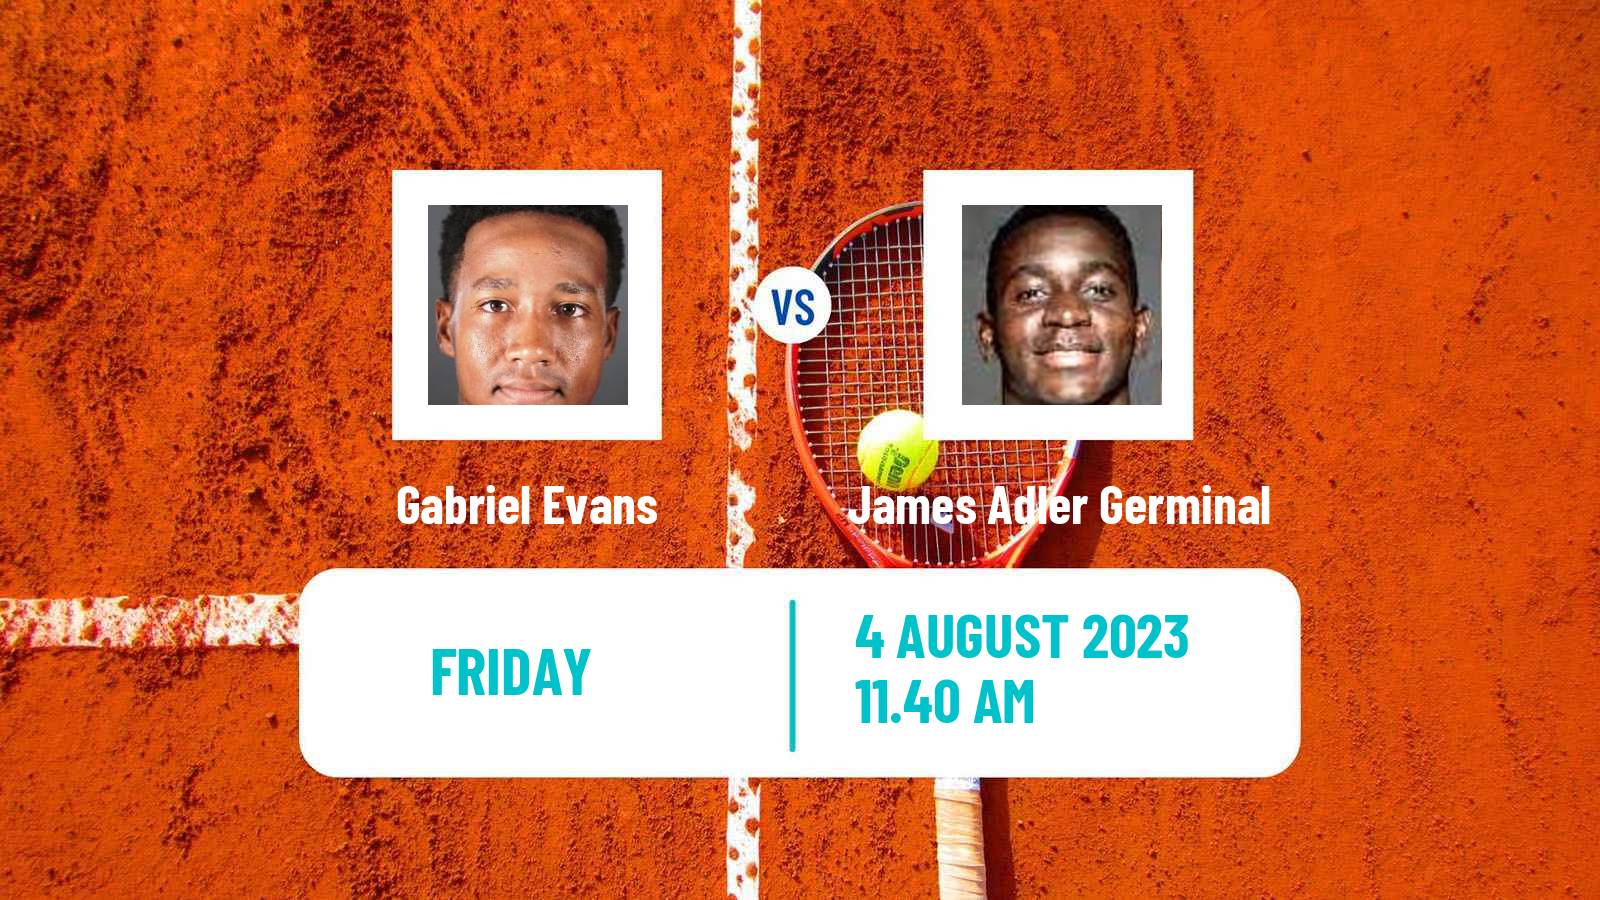 Tennis Davis Cup Group IV Gabriel Evans - James Adler Germinal